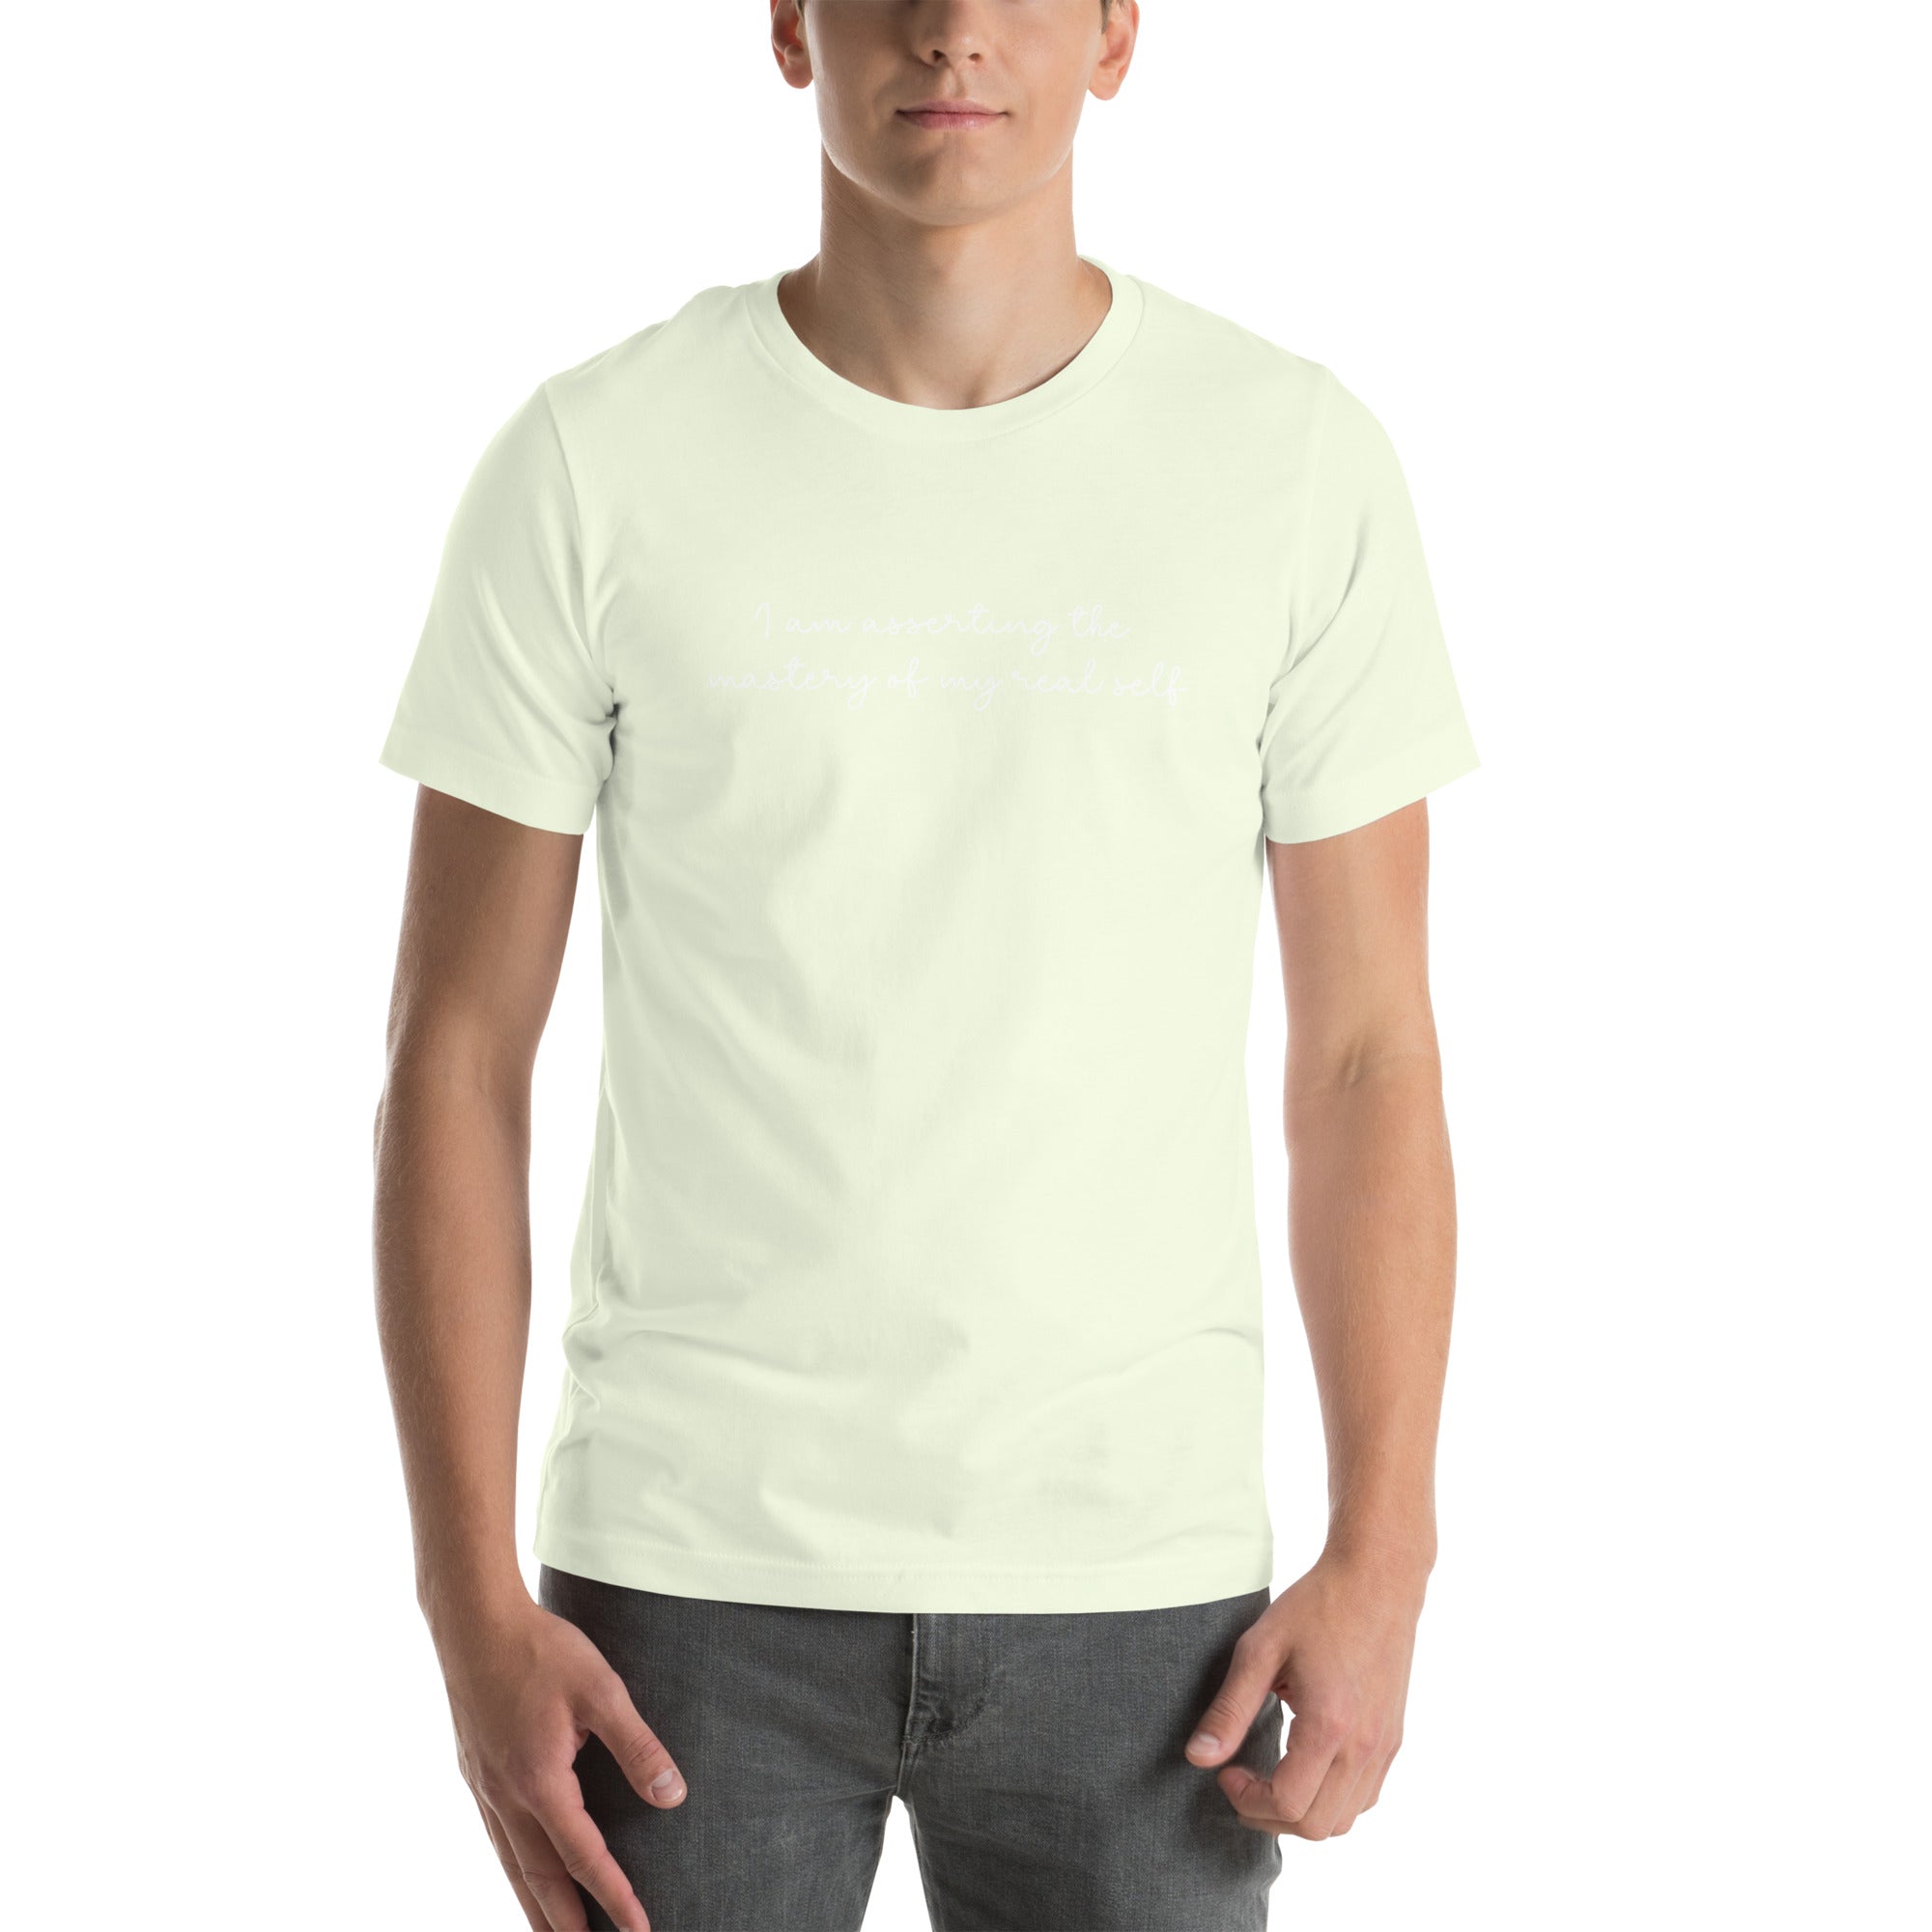 Self Confidence Affirmation: Assert Mastery Over Self Premium Short-Sleeve Unisex T-Shirt | Positive Affirmation Tee